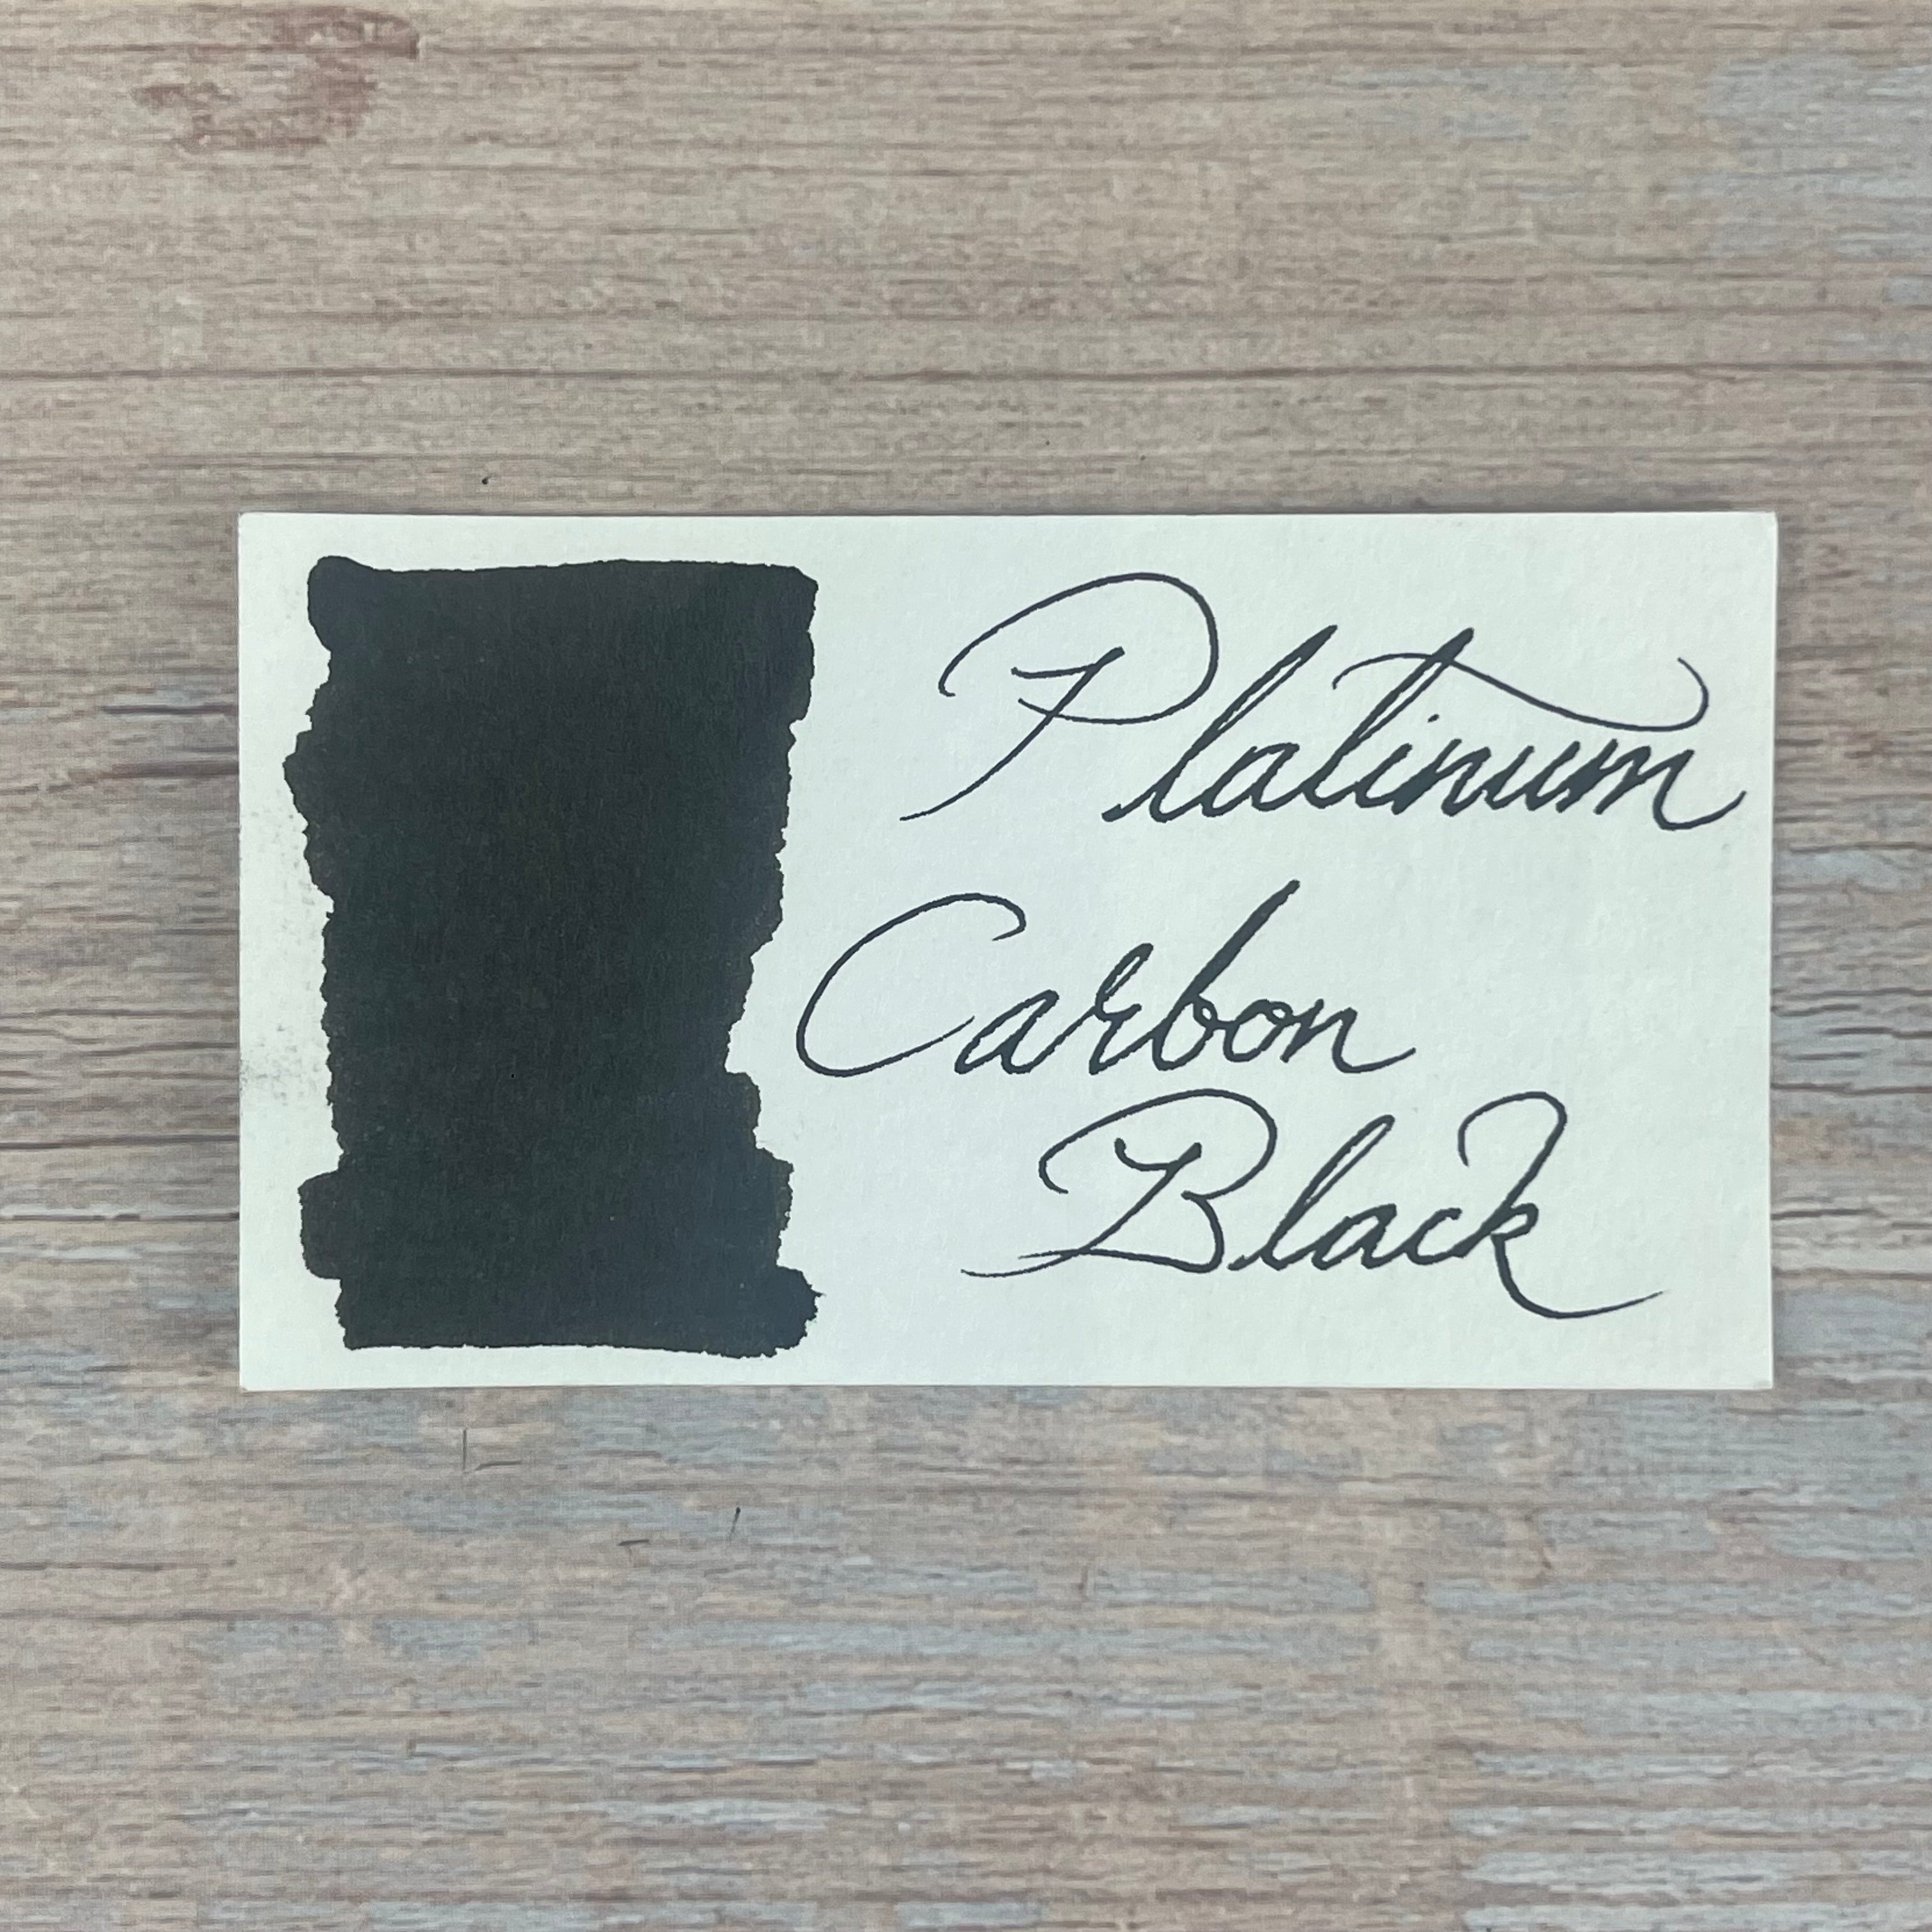 Platinum Carbon Black Ink